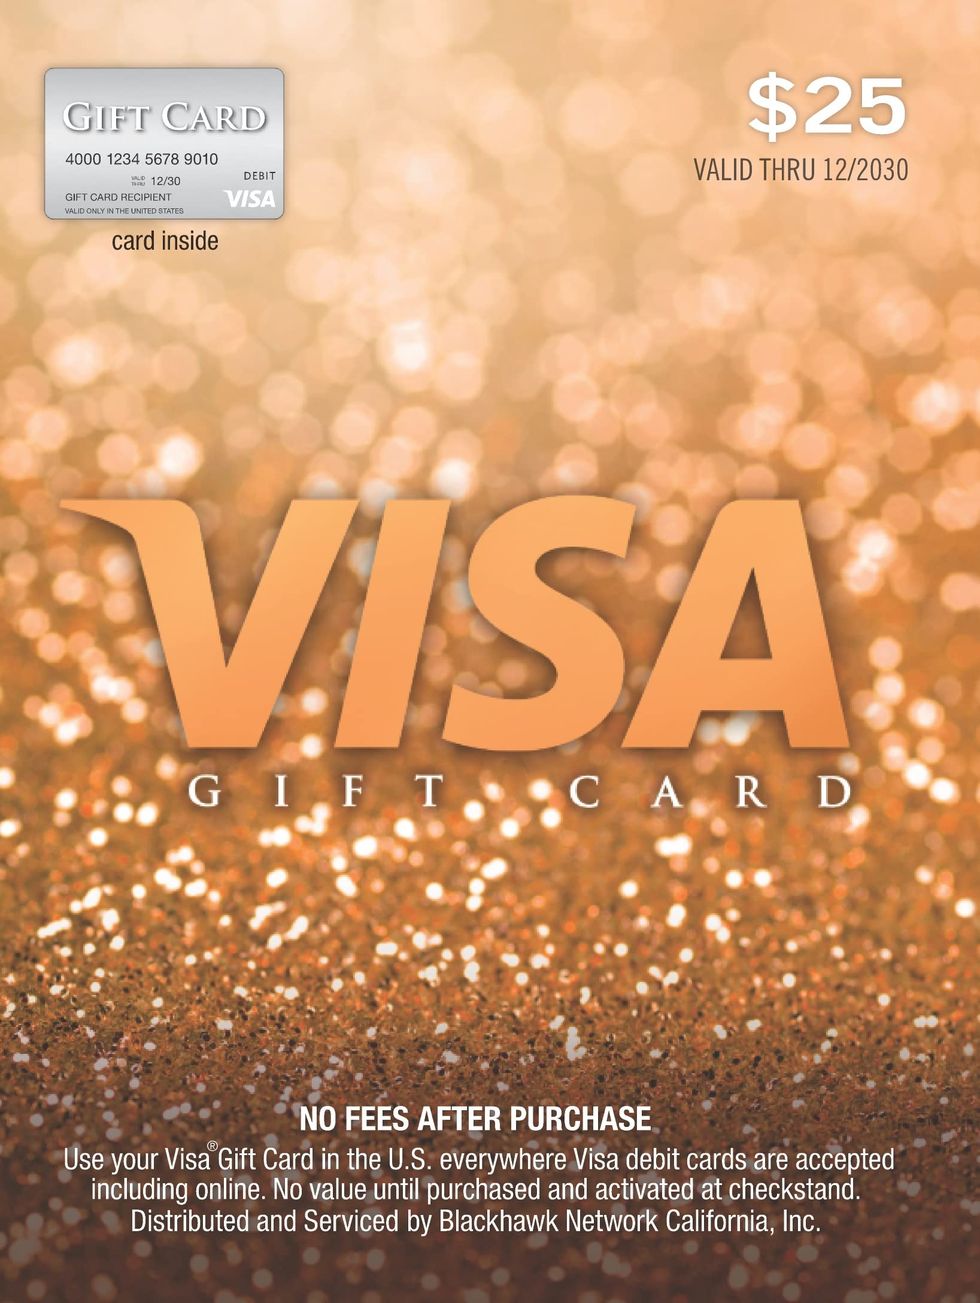 How to check Walmart gift card Visa?